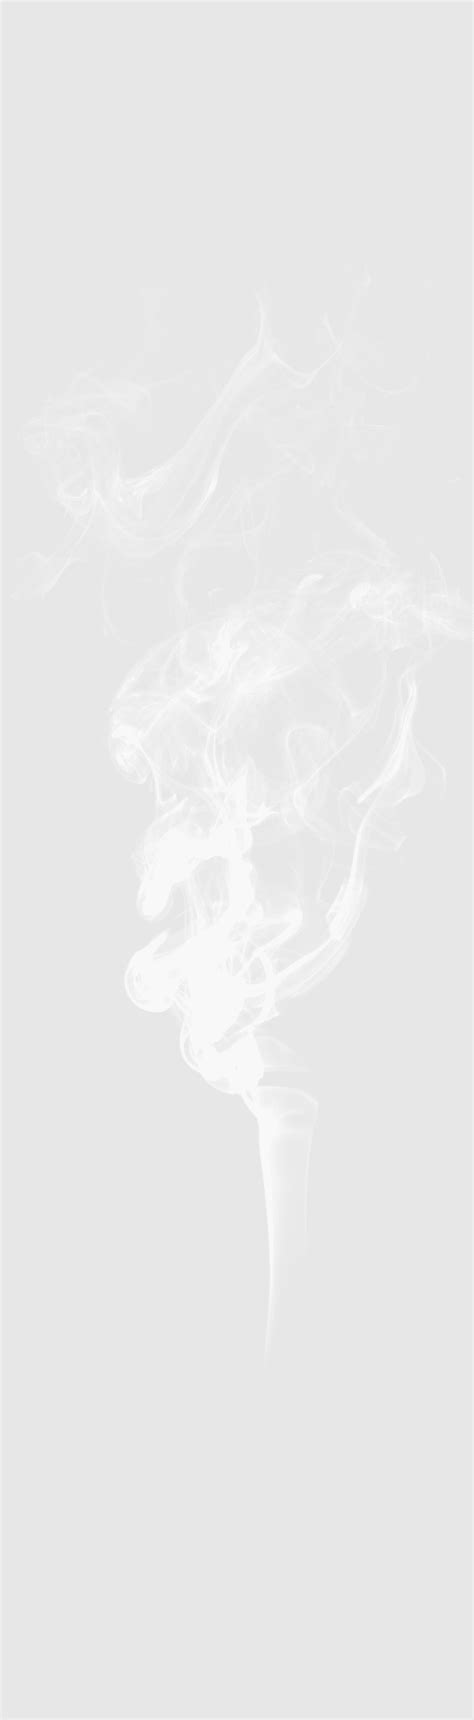 Psd Smoke Cool Smoke Smoke Effect Cool Backgrounds No Smoking